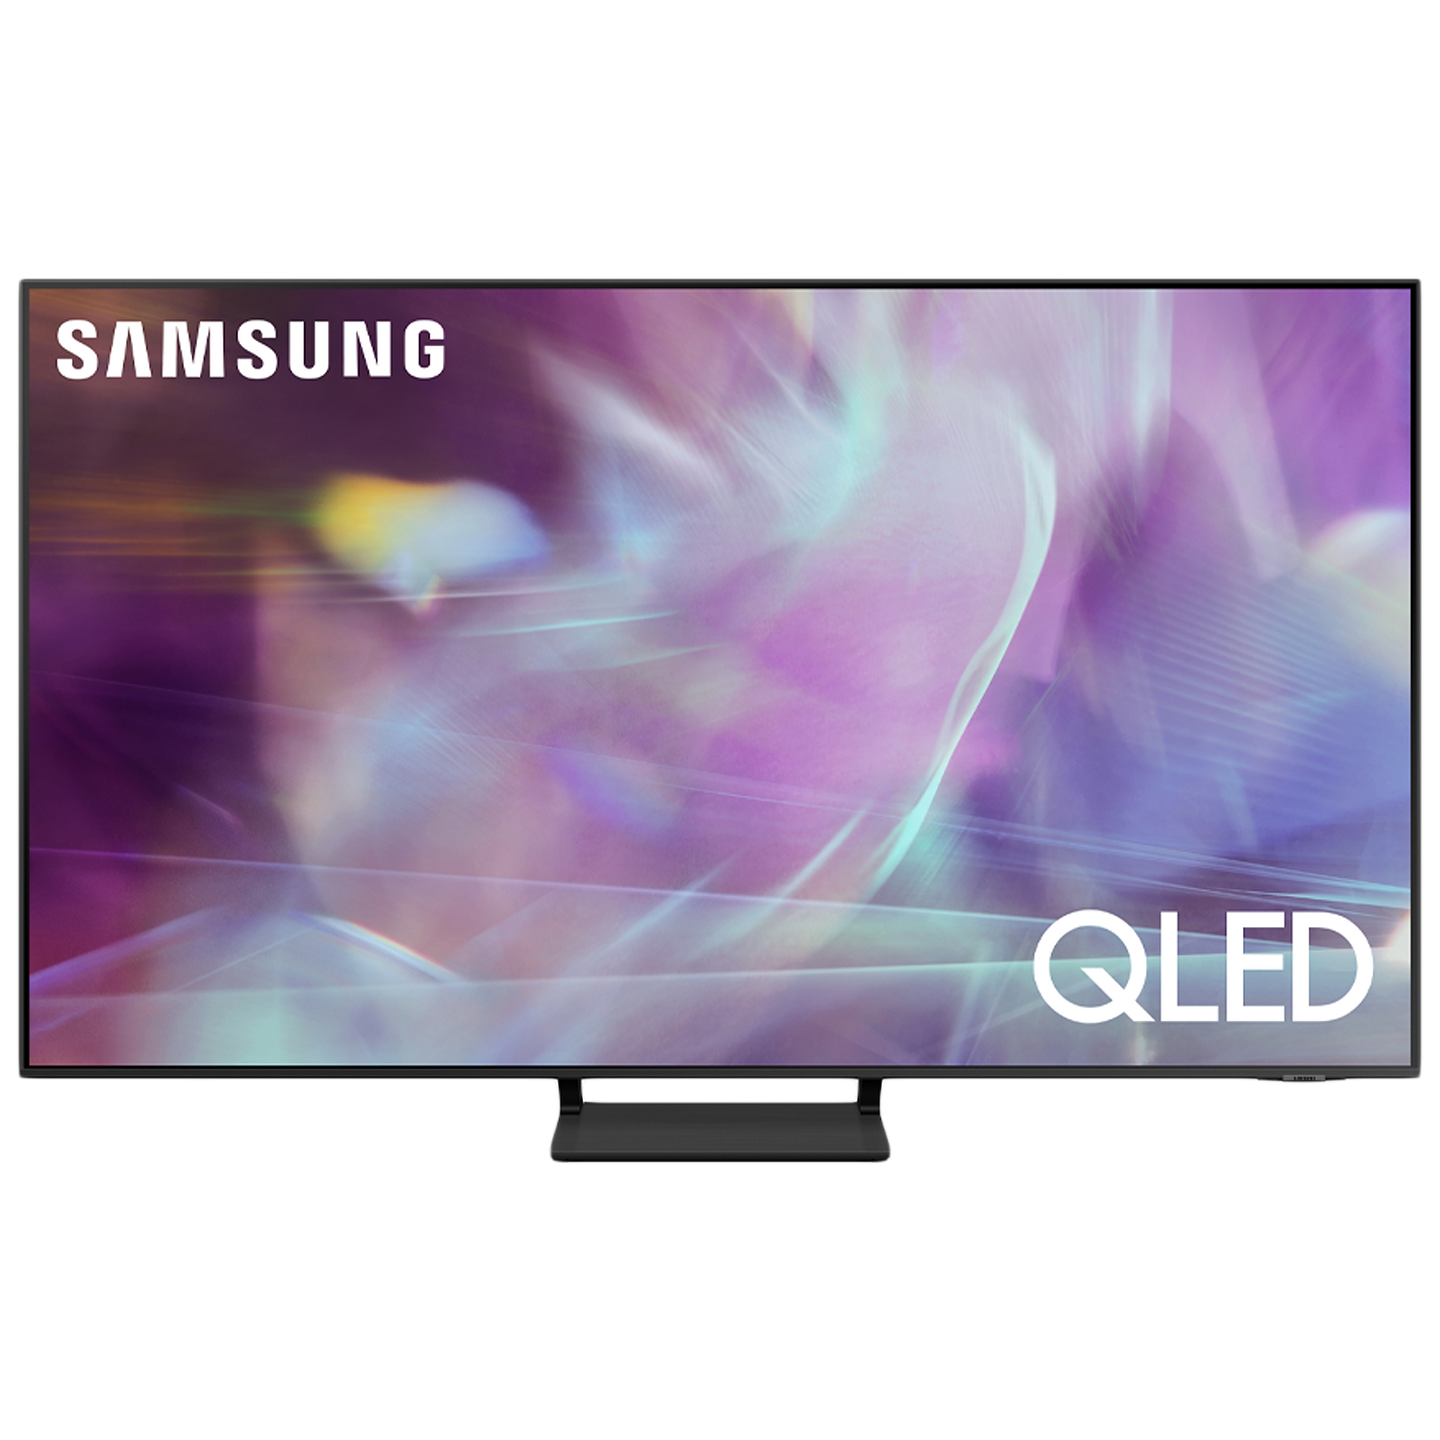 Samsung 6 Series 108cm (43 Inch) Ultra HD 4K QLED Smart TV